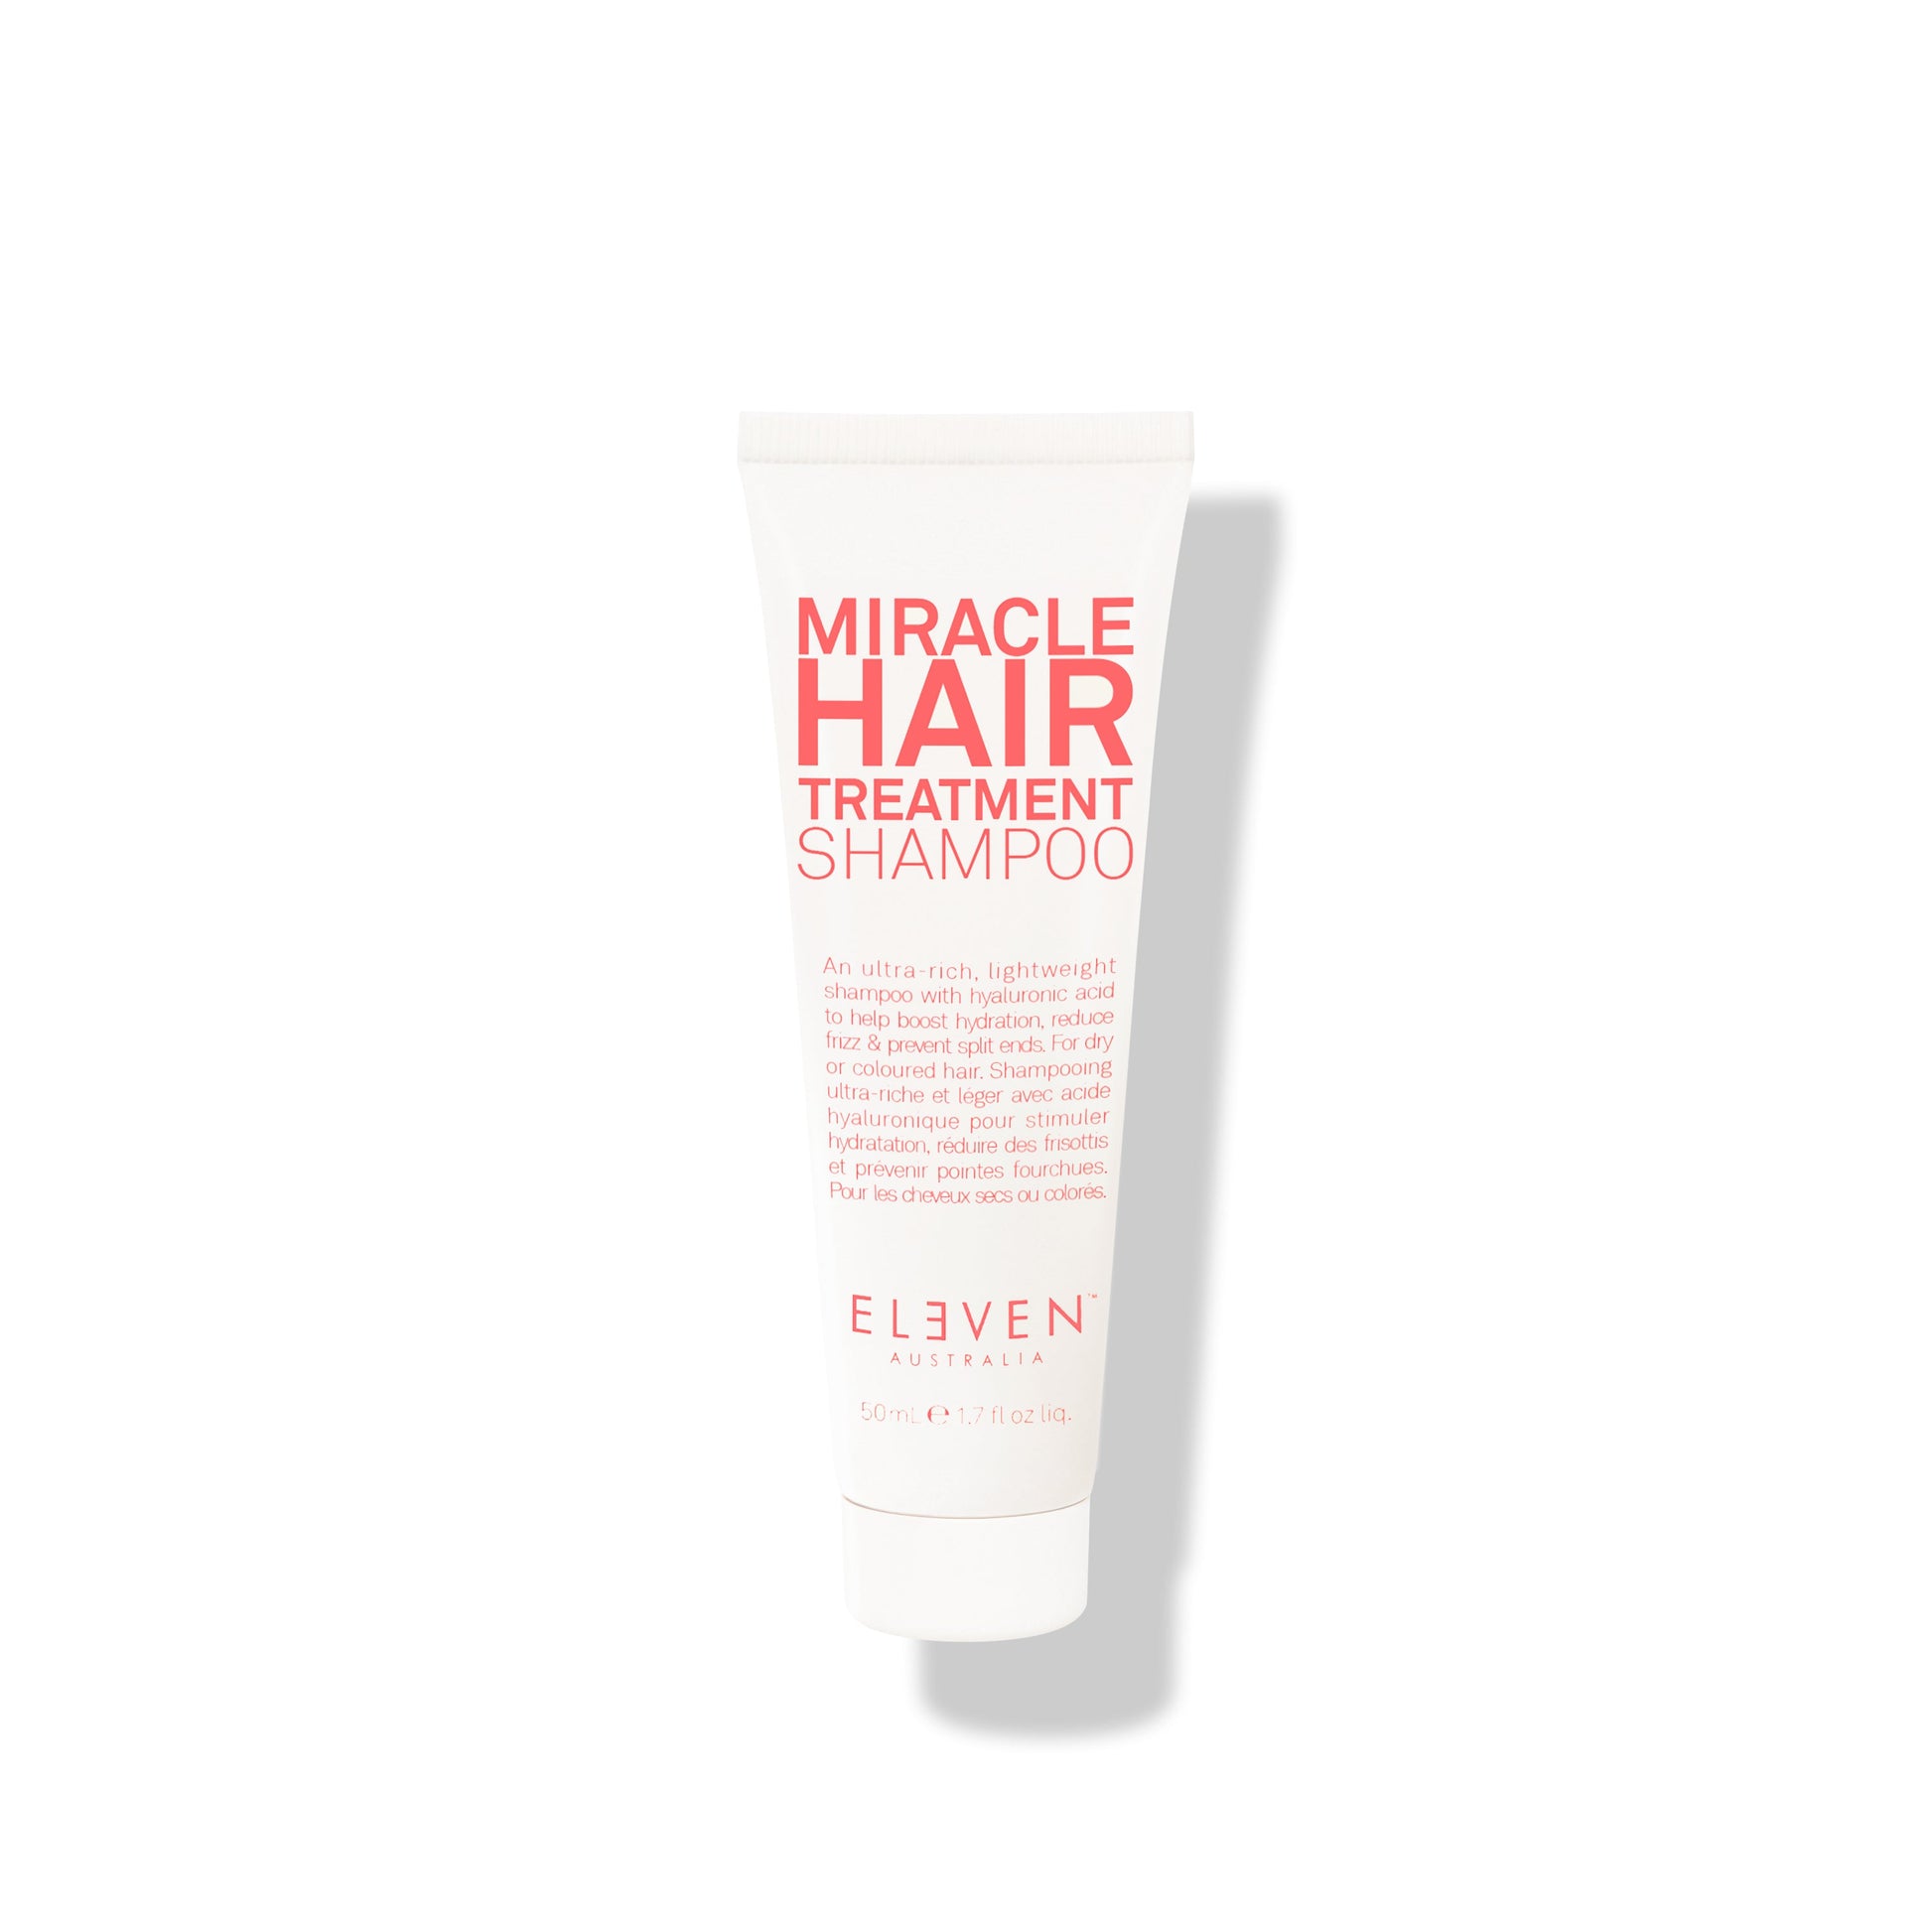 Miracle Hair Treatment Shampoo - 50ml - ELEVEN Australia